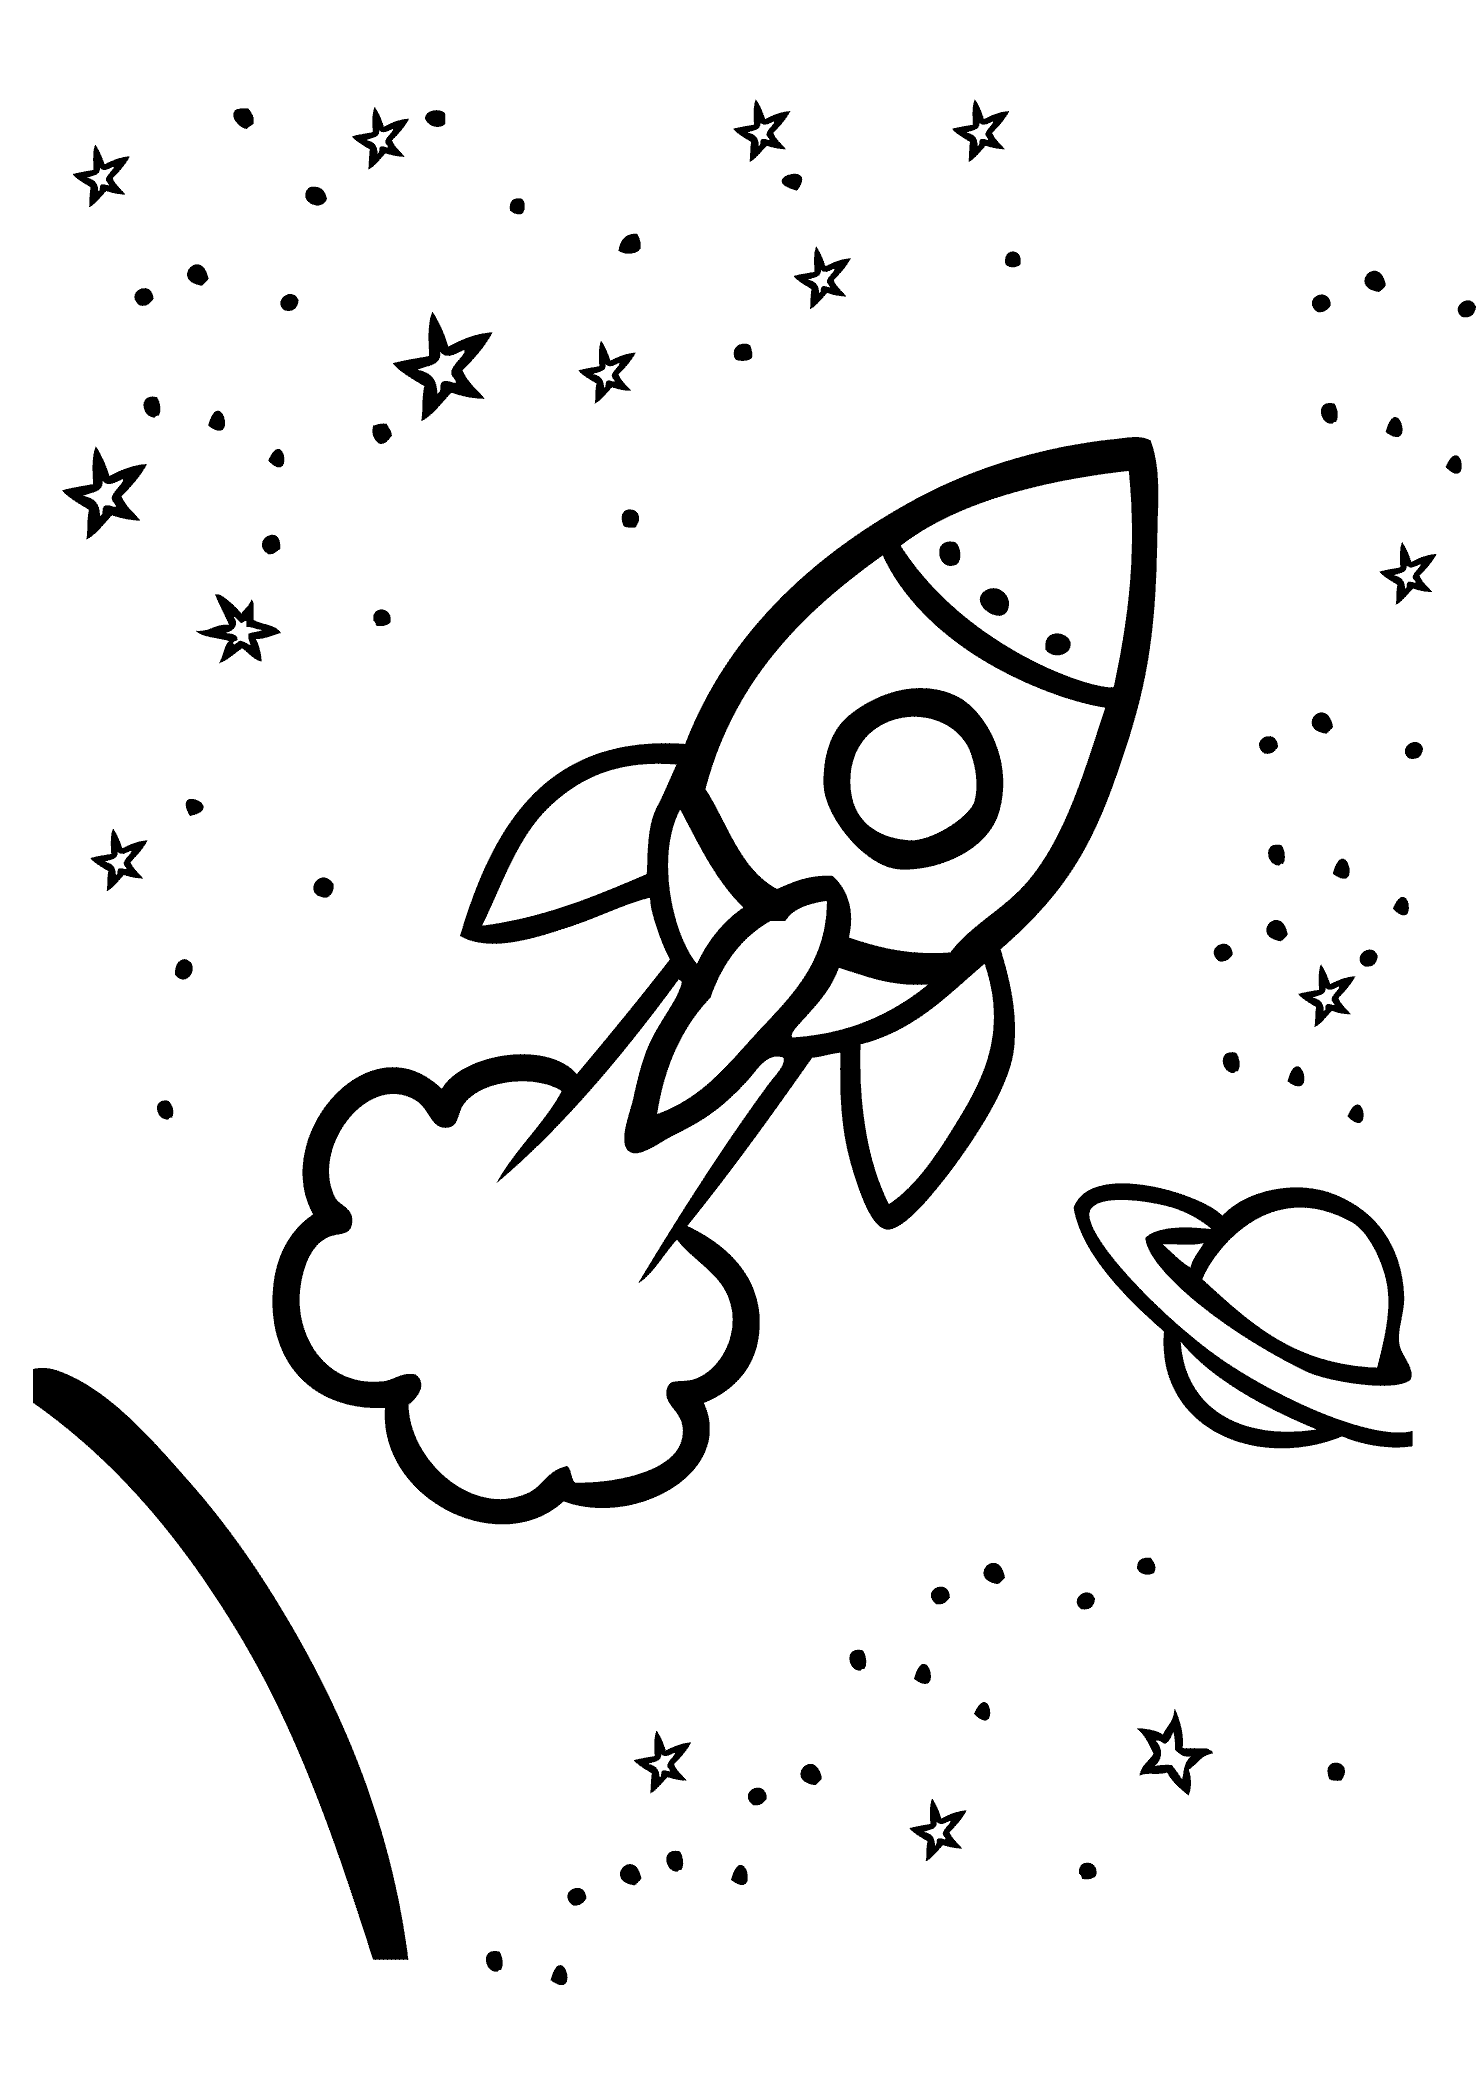 Раскраска ракета 2 3 года. Раскраска. В космосе. Ракета раскраска. Космос раскраска для детей. Раскраска ракета в космосе.